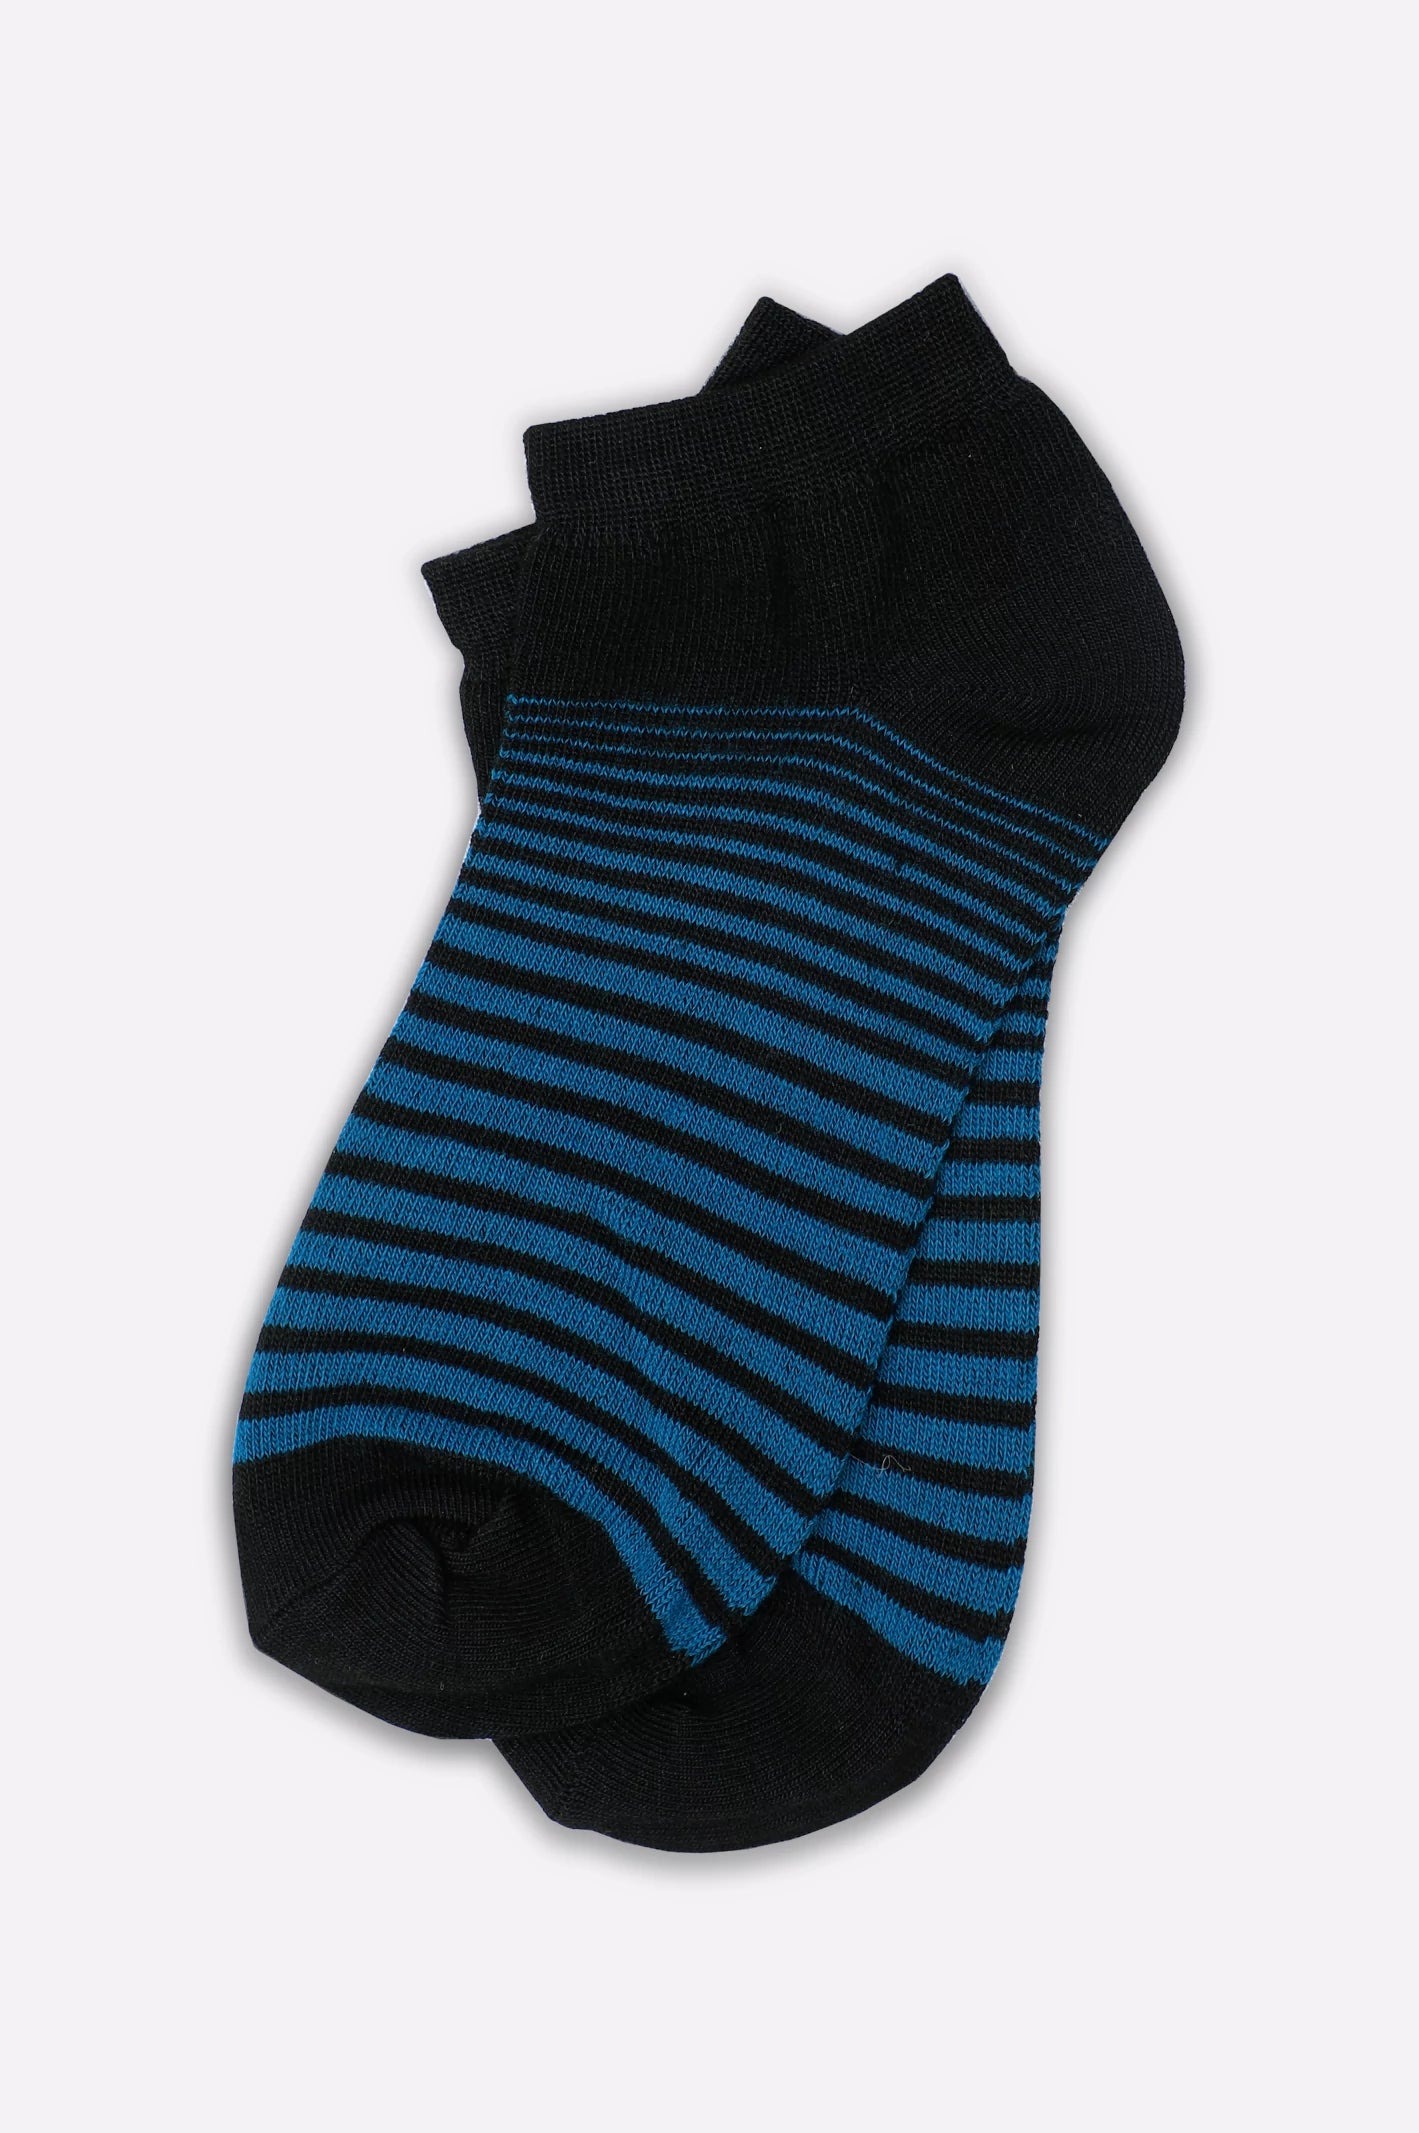 
Blue-Ankle-Socks